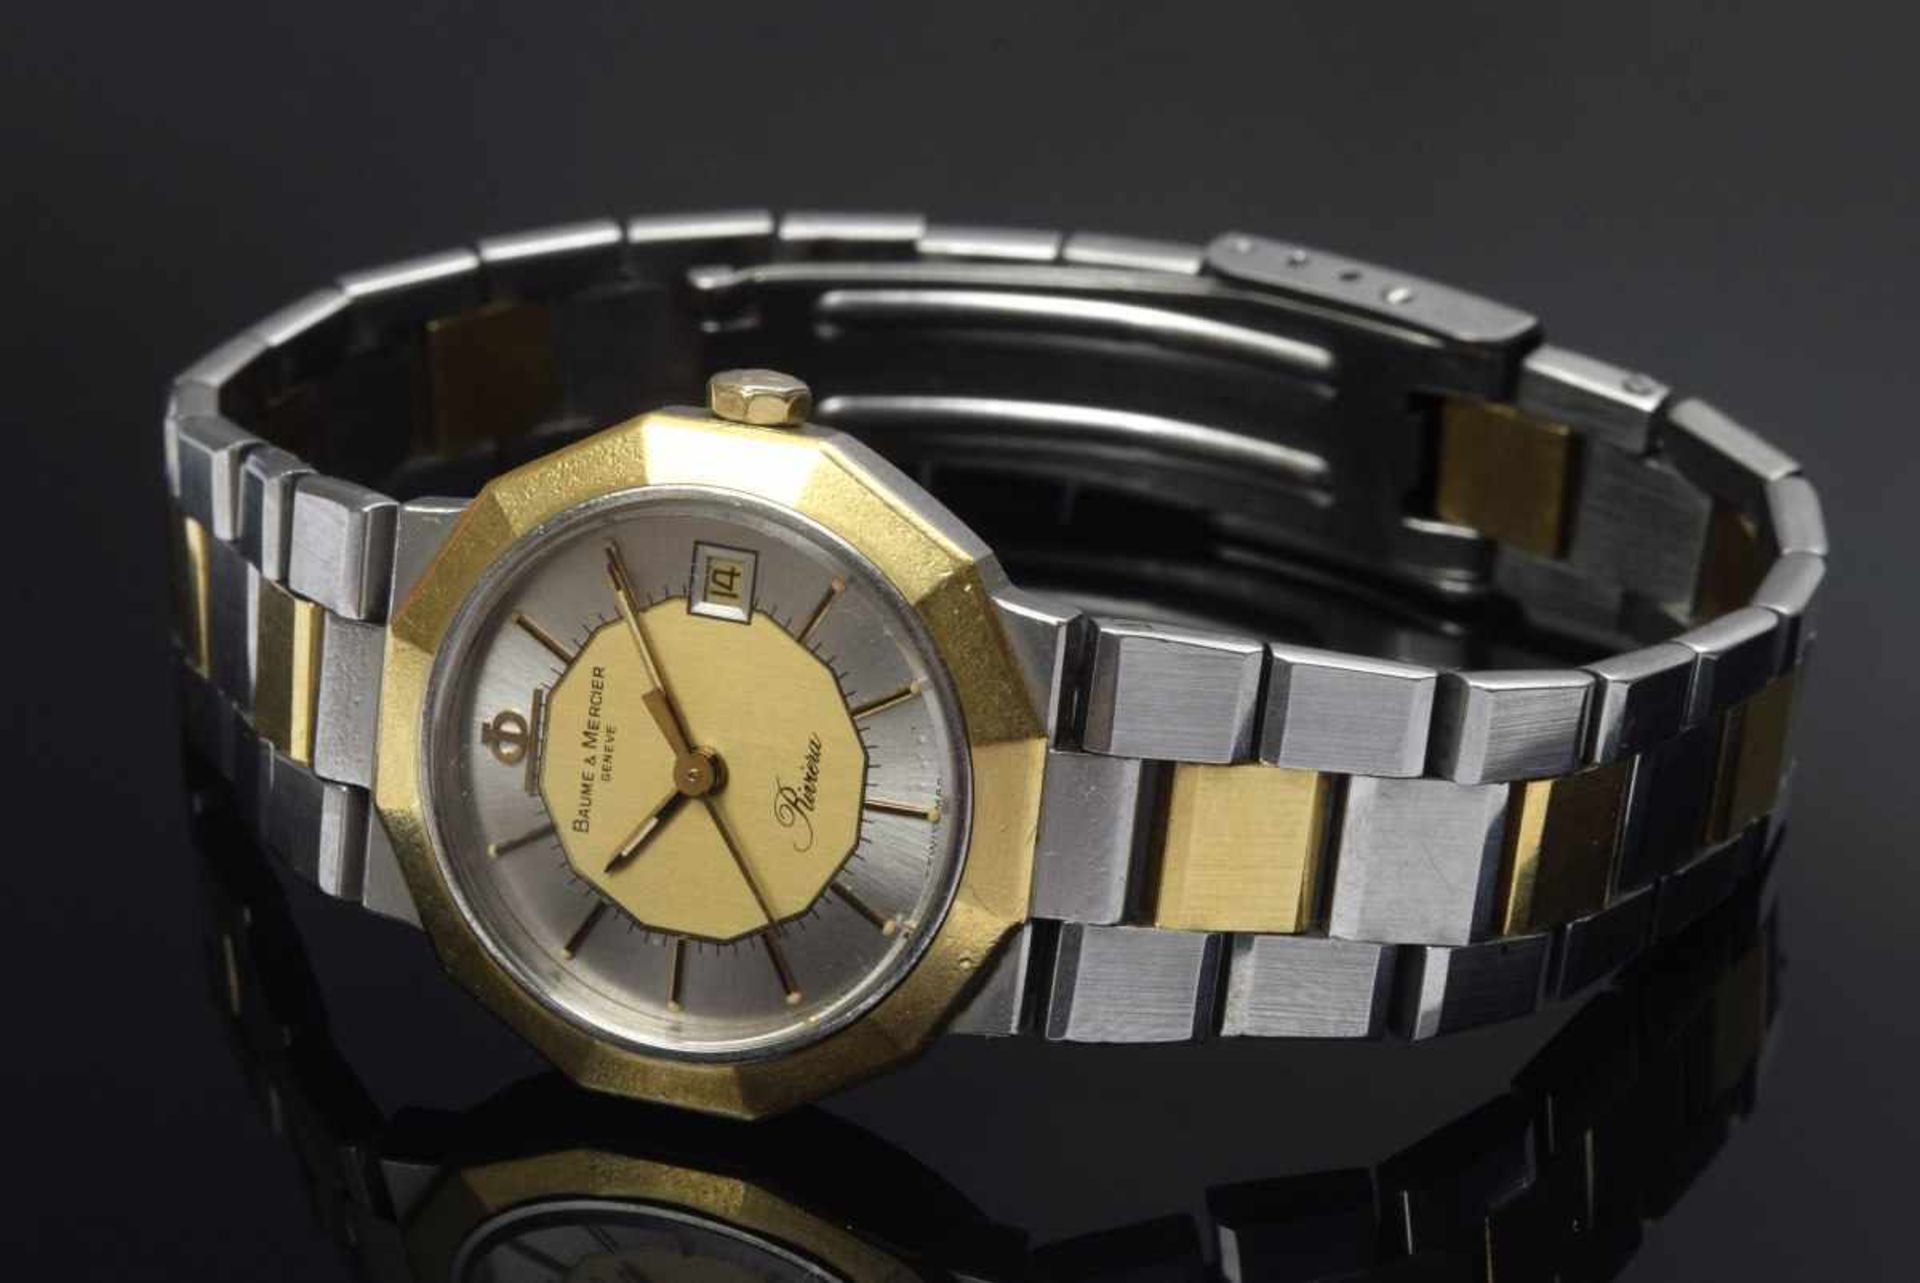 Baume & Mercier "Riviera" ladies' watch, stainless steel/gold, quartz movement, central second hand,